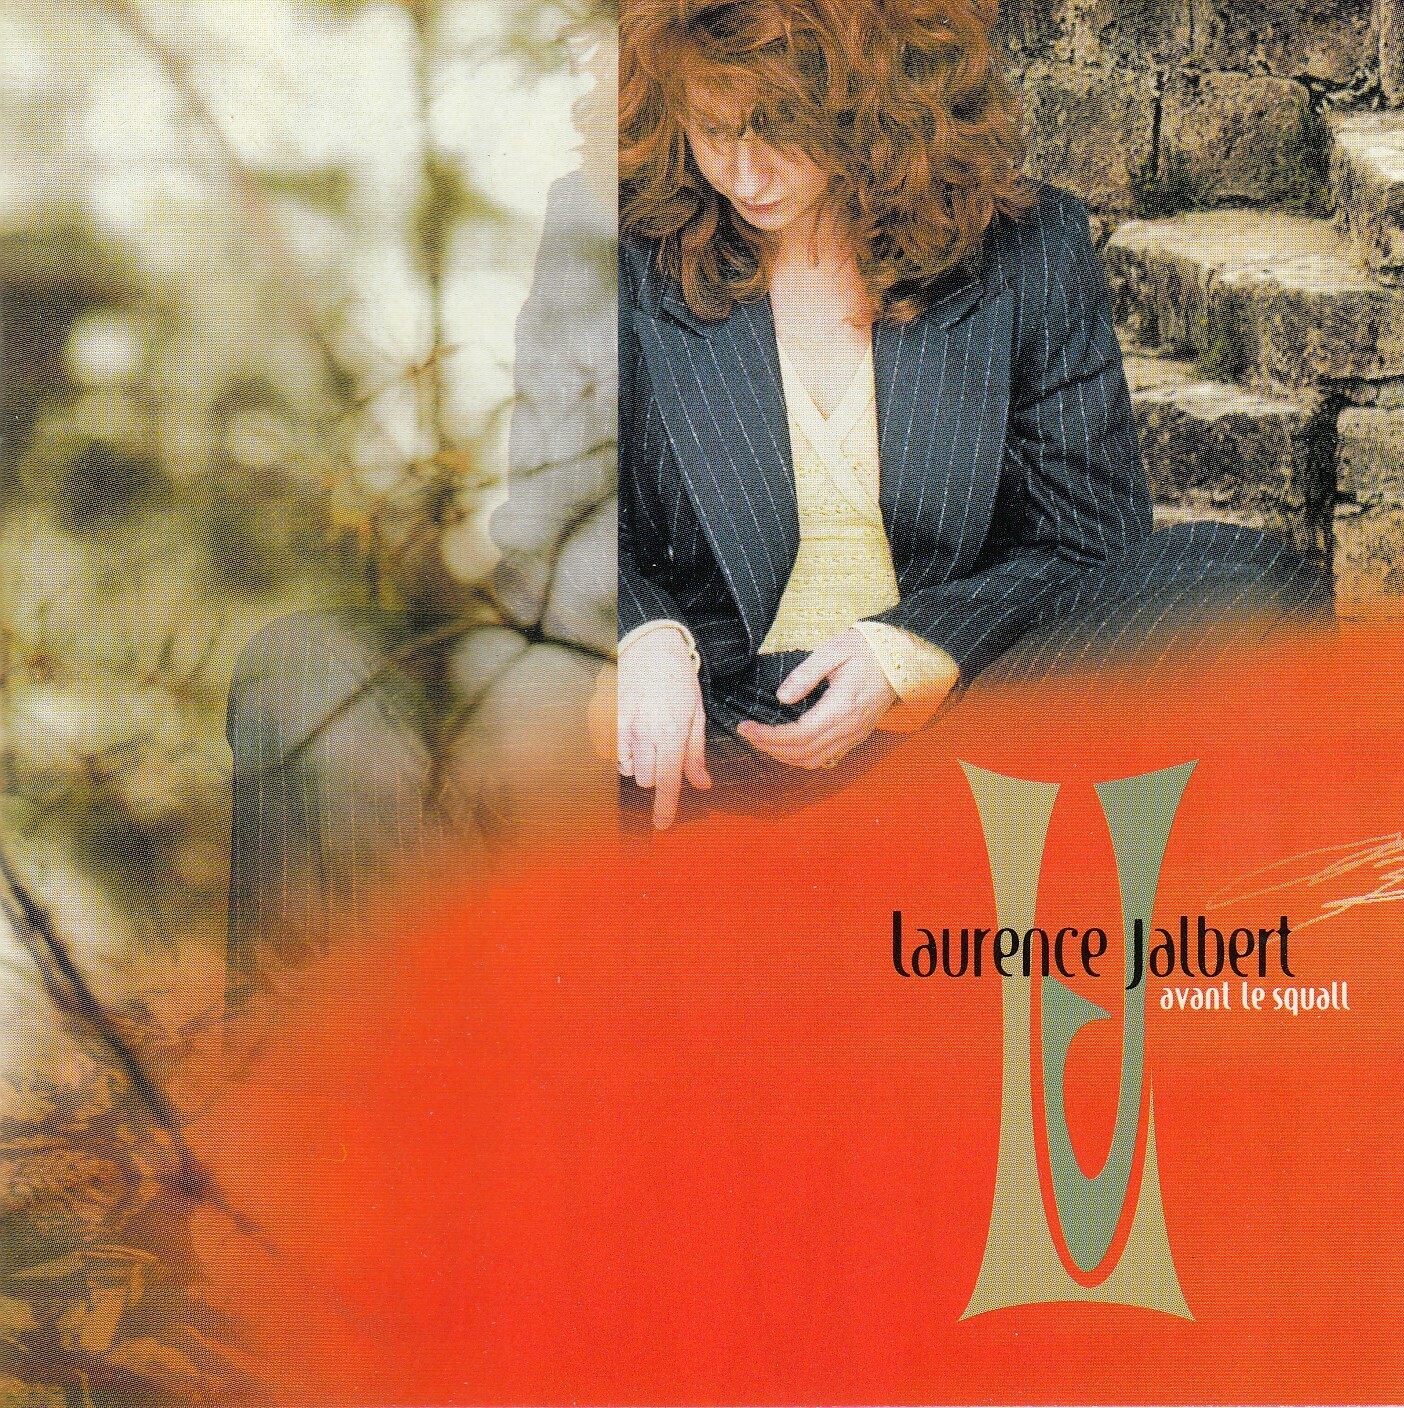 Laurence Jalbert - Avant le squall (CD)